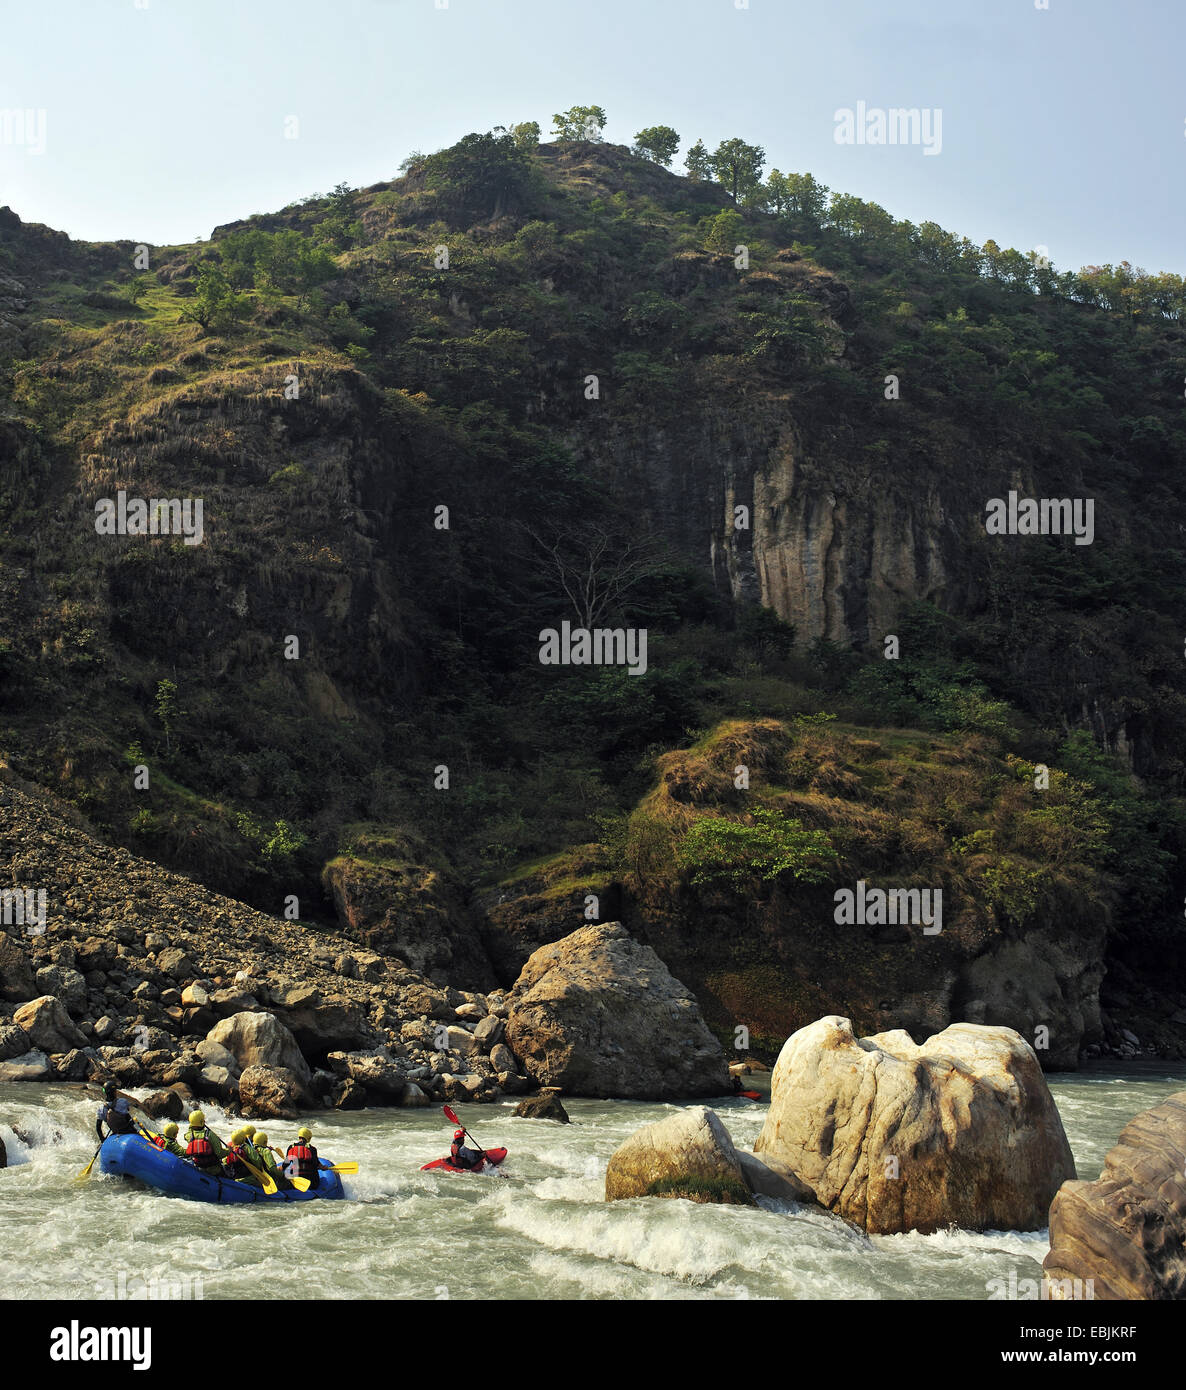 Rafting im Wildwasser der Gandaki Fluss, Nepal Stockfoto